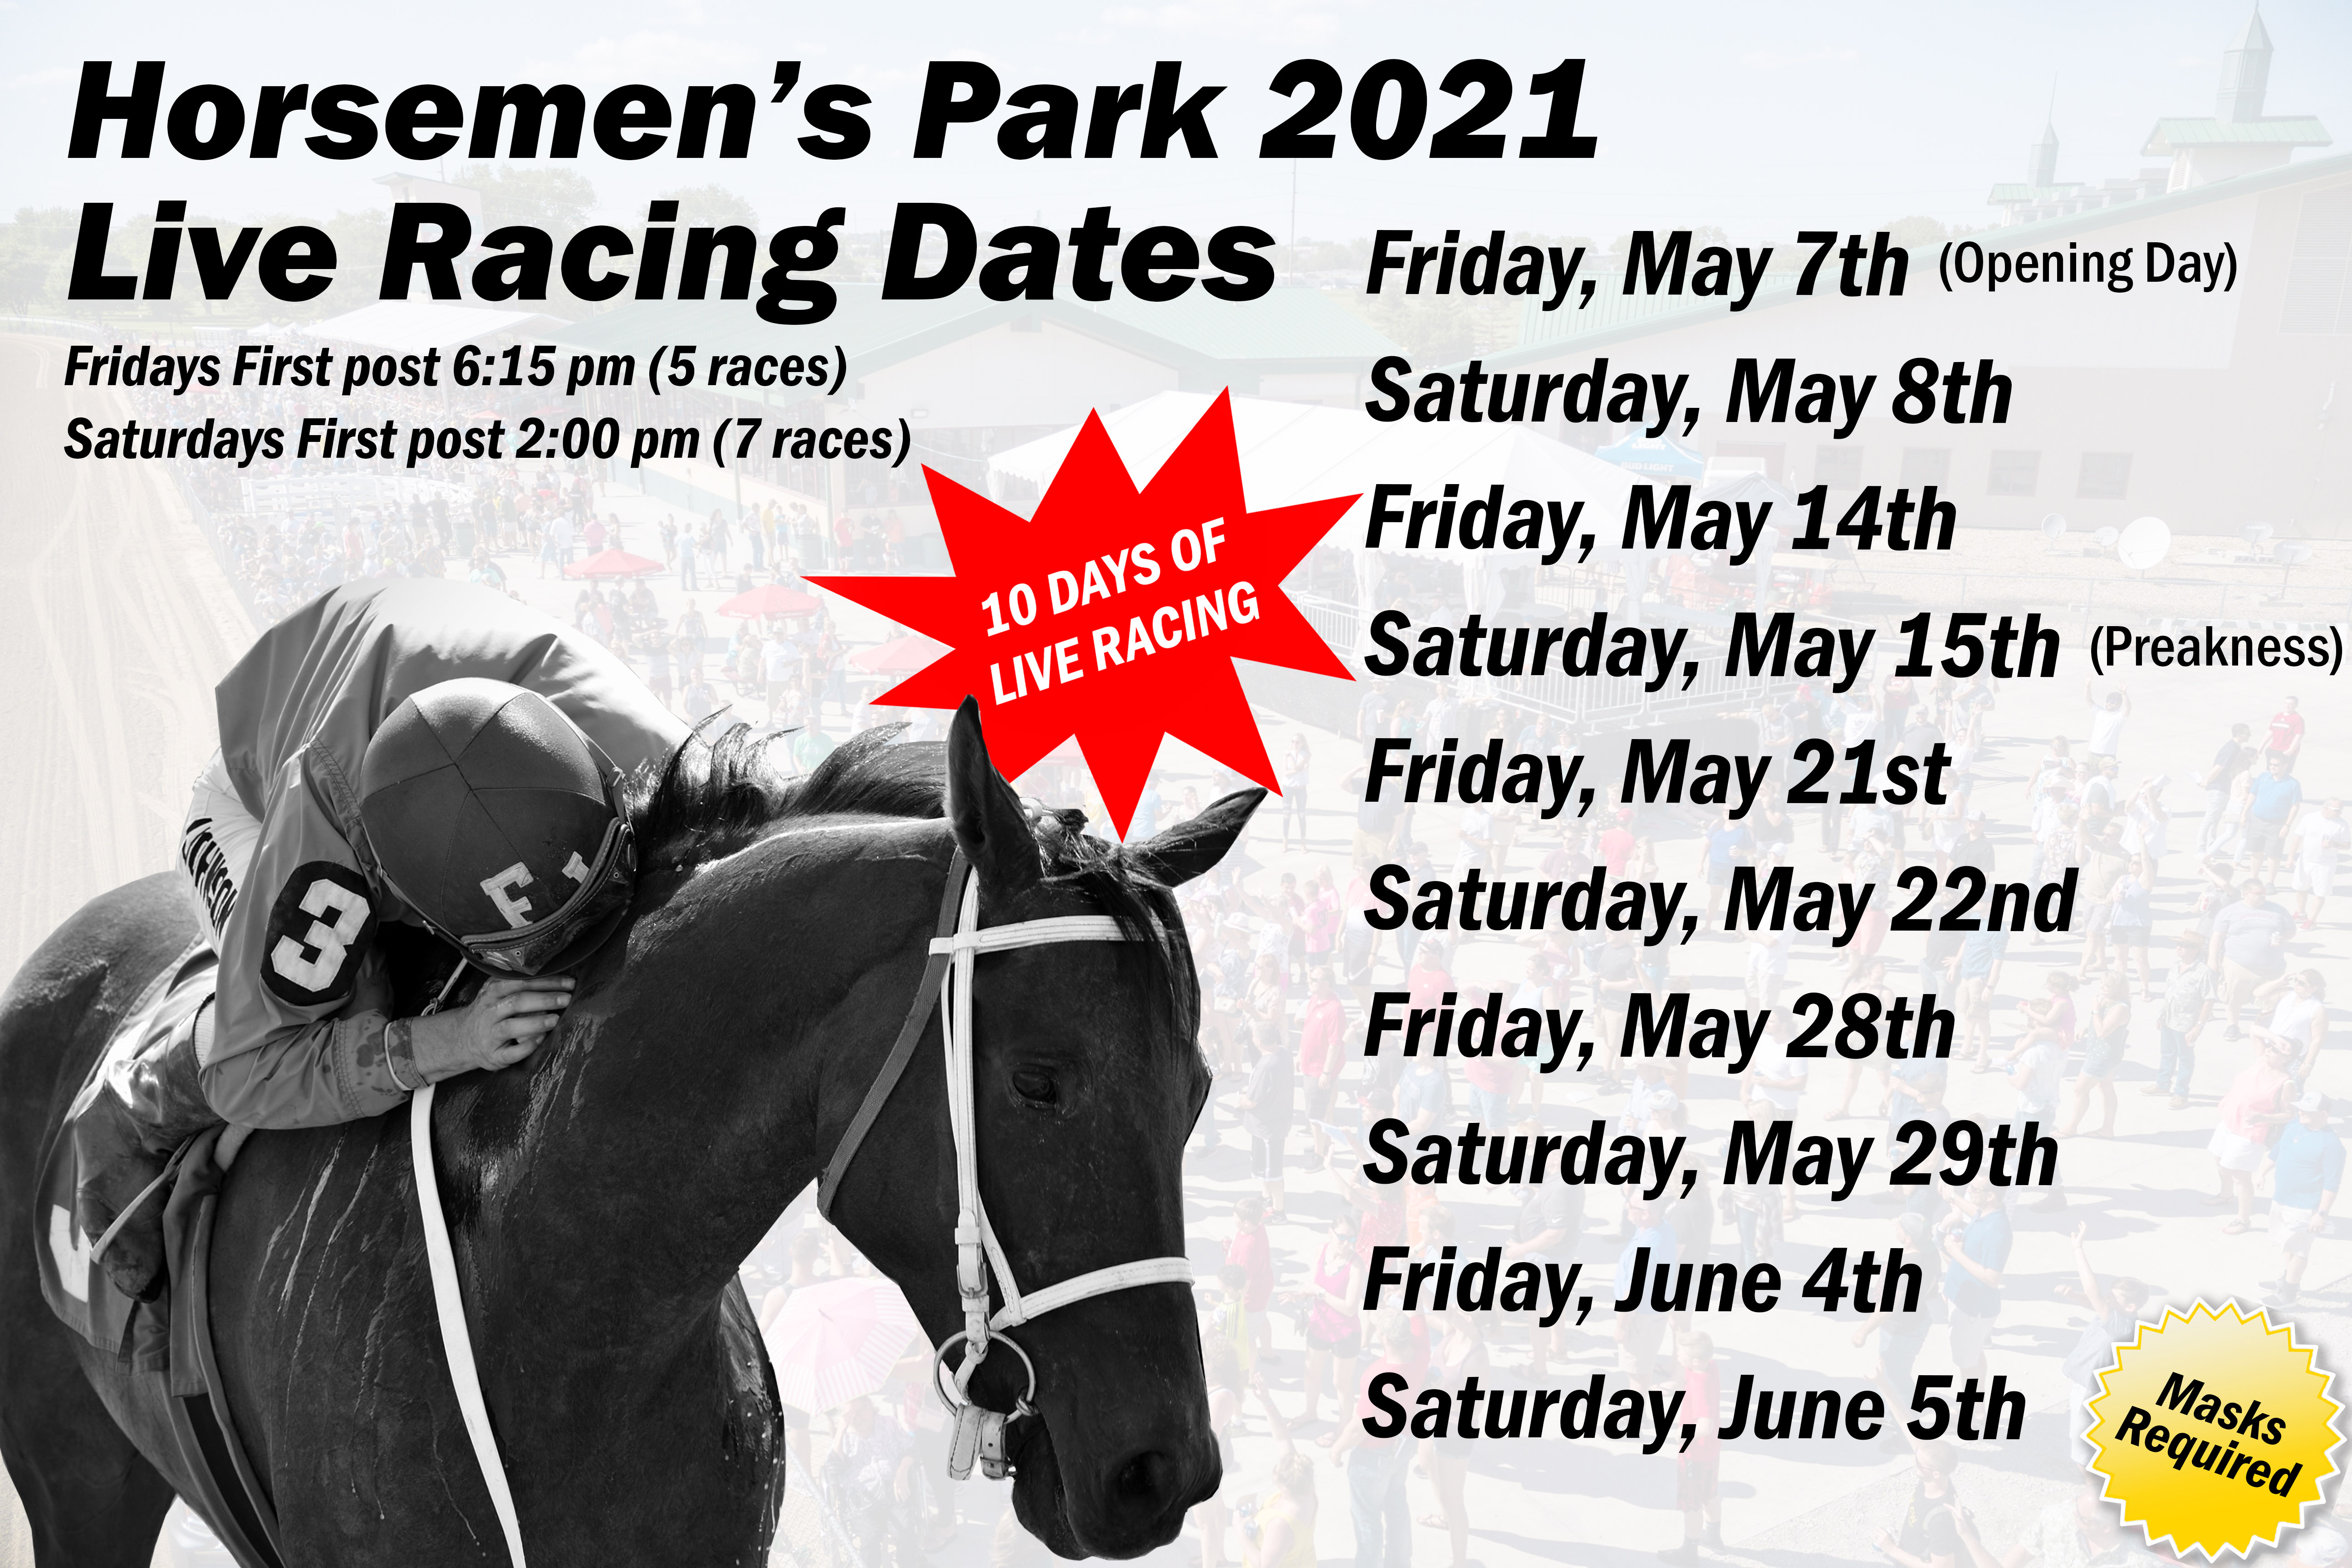 Horsemen's Park 2021 Live Racing Dates&amp;Times.jpg